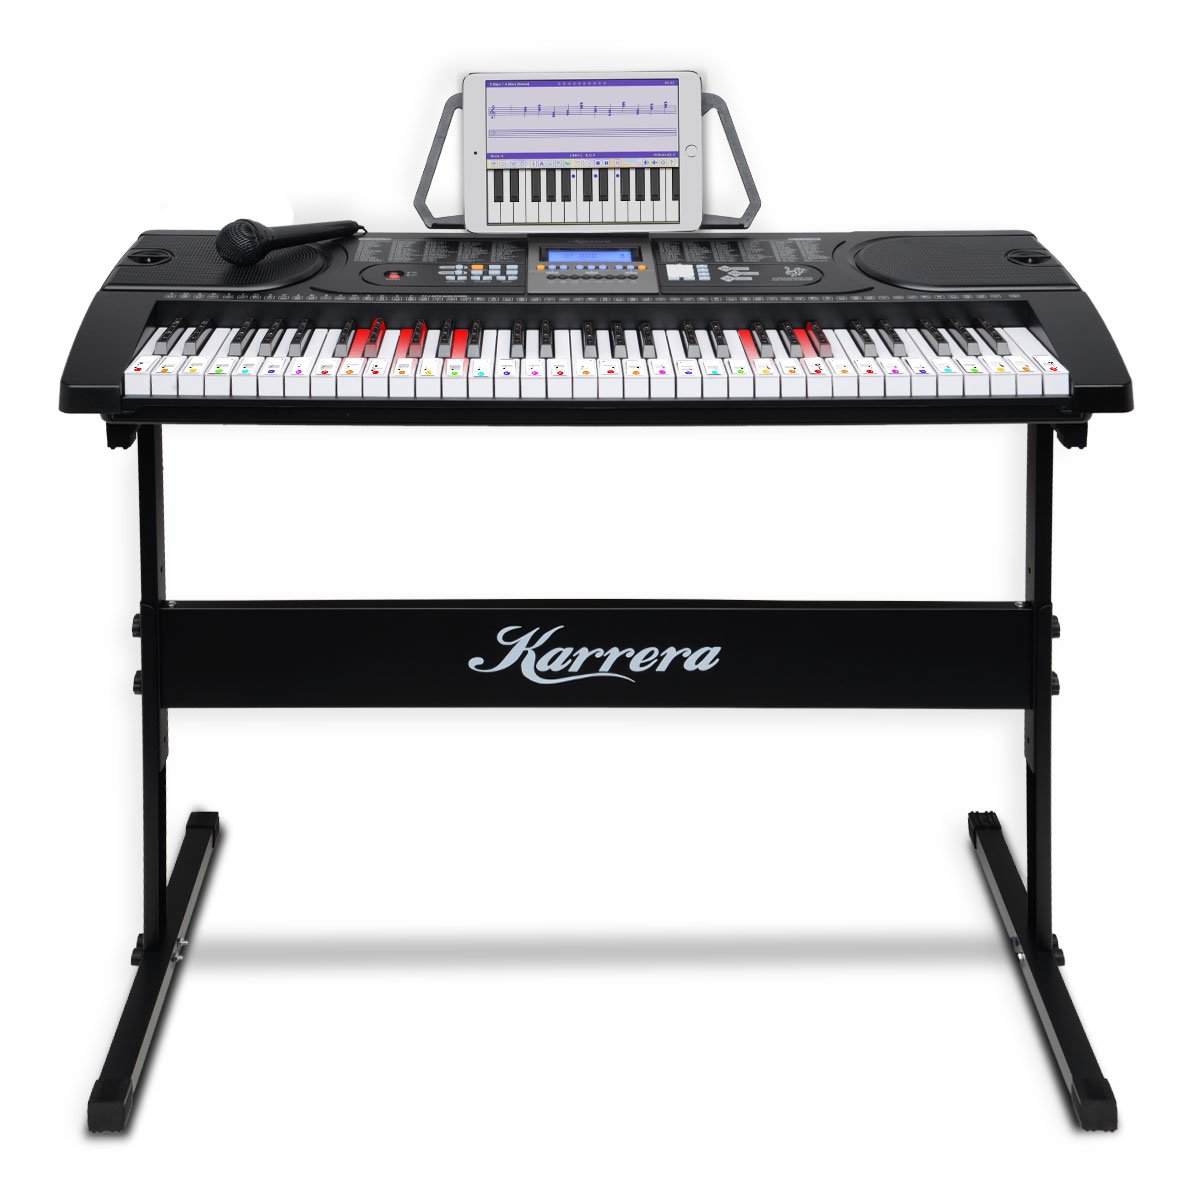 Karrera 61 Keys Electronic LED Keyboard Piano with Stand - Black 2